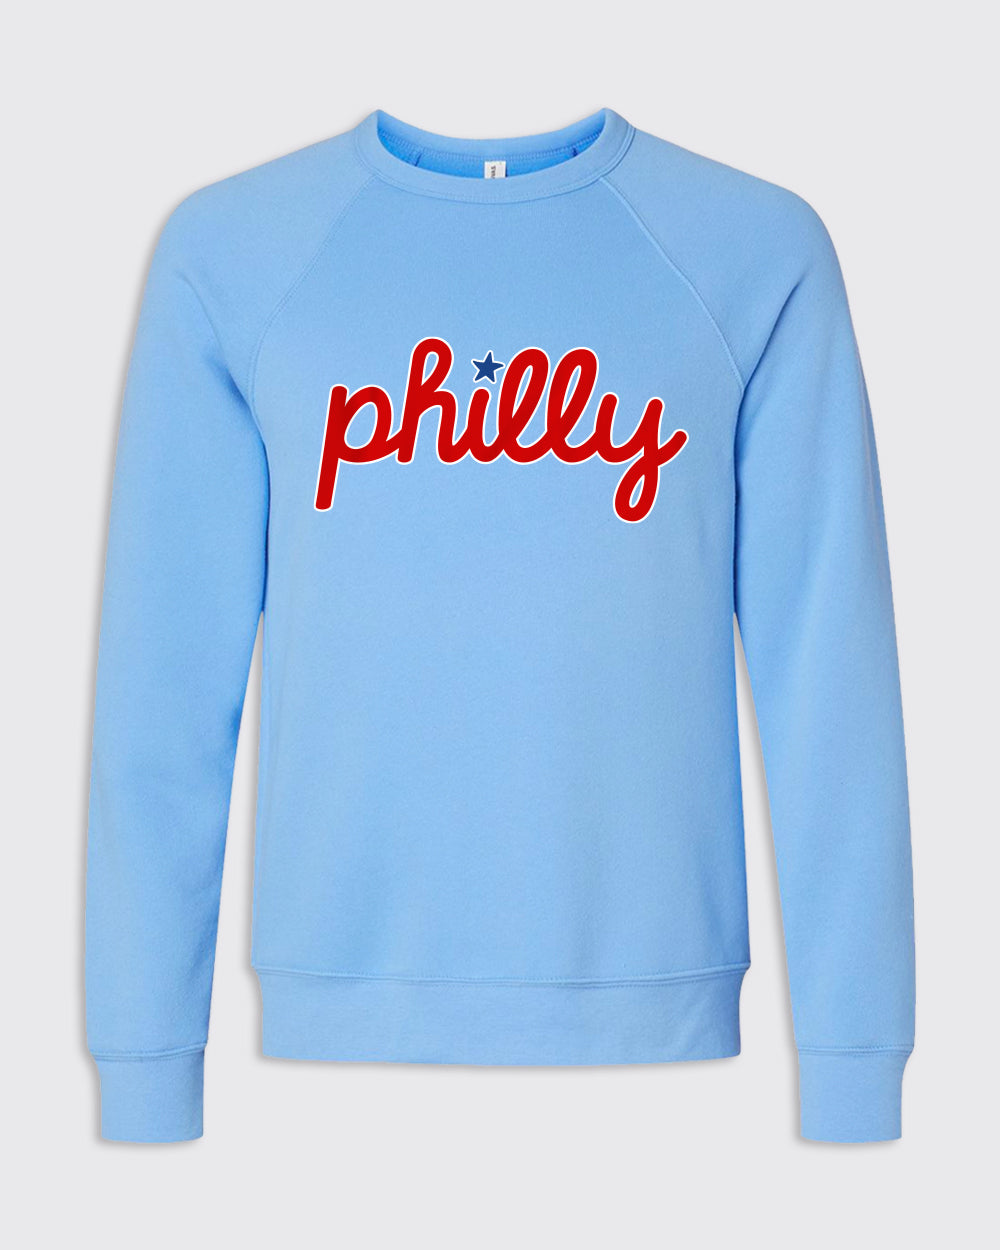 Cursive Phillies Crew Neck Sweatshirt 